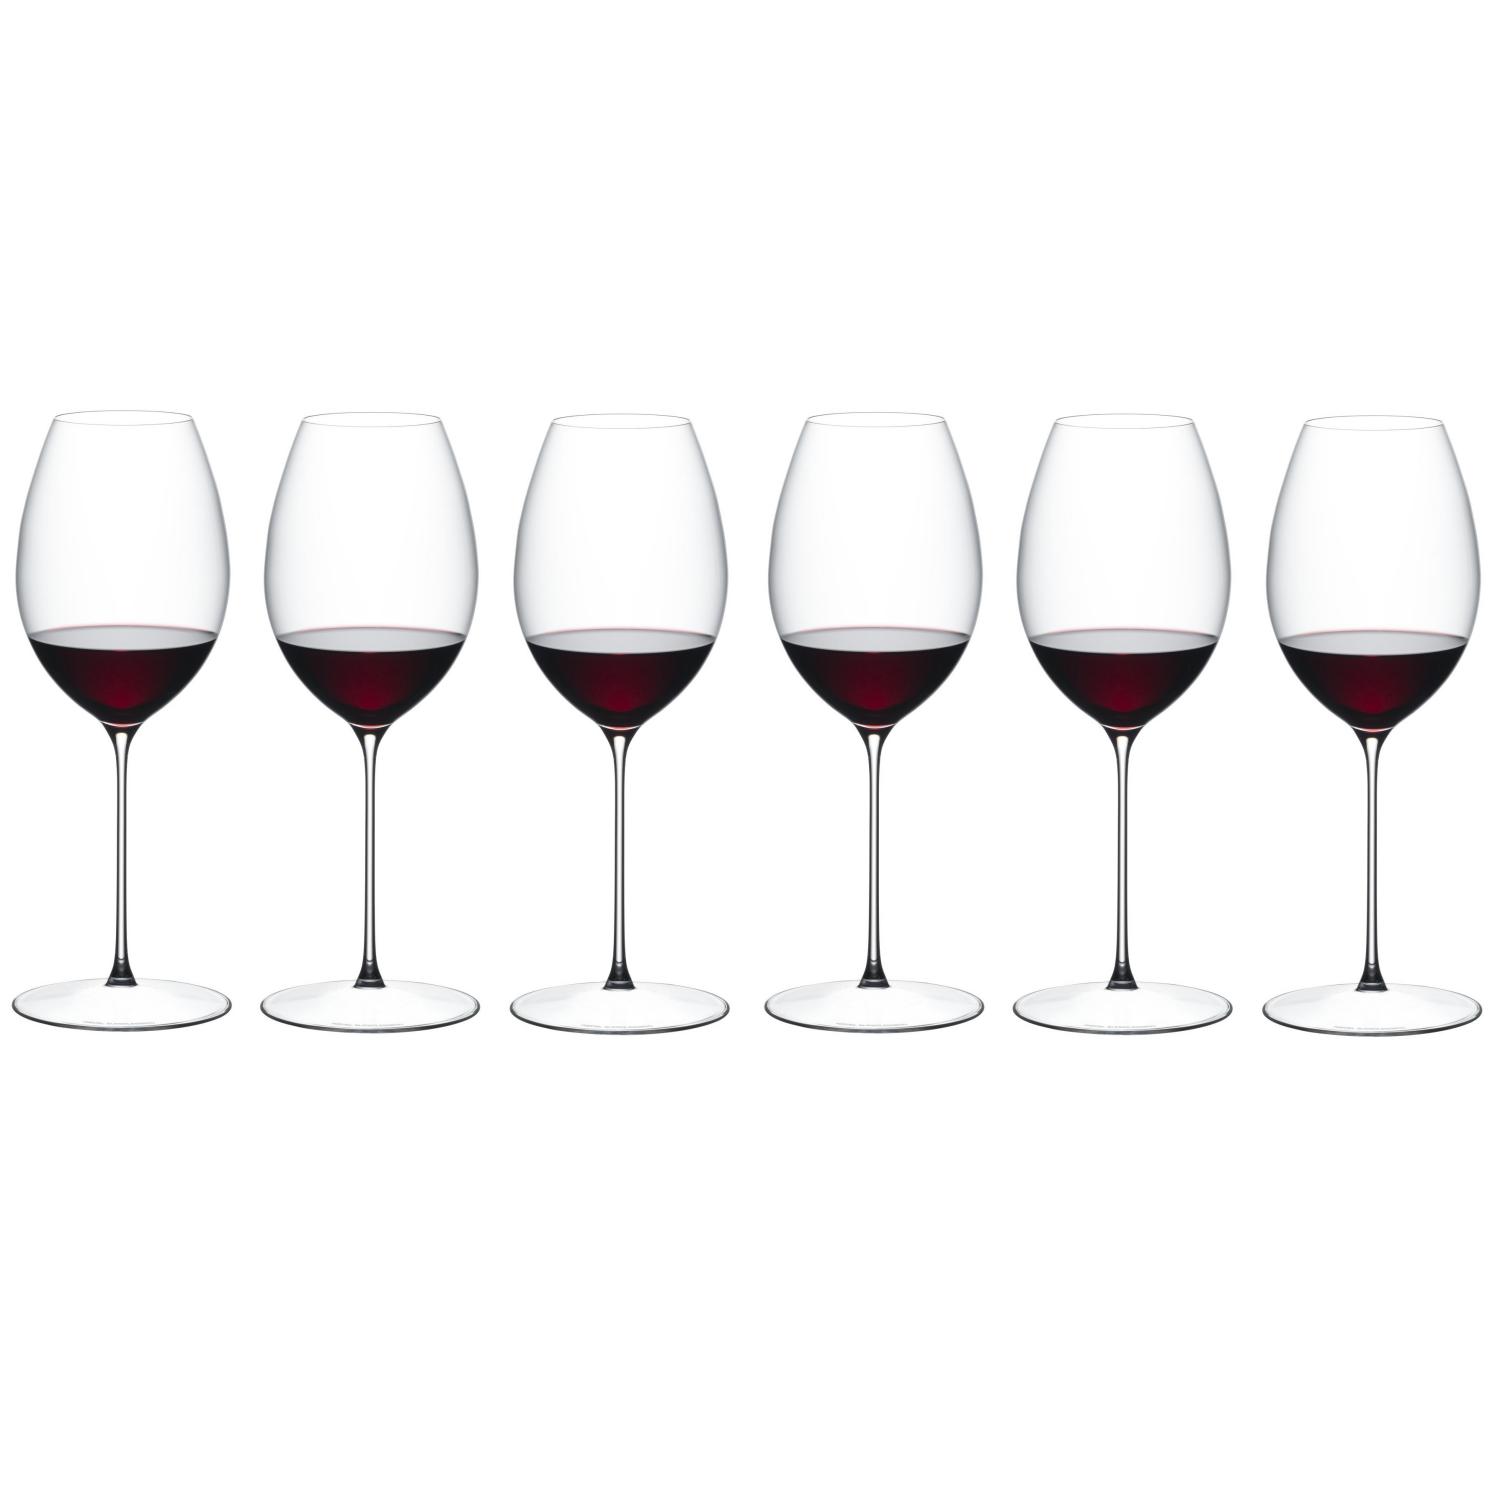 6 бокалов для красного вина RIEDEL Superleggero Party Set Hermitage/Syrah 668 мл